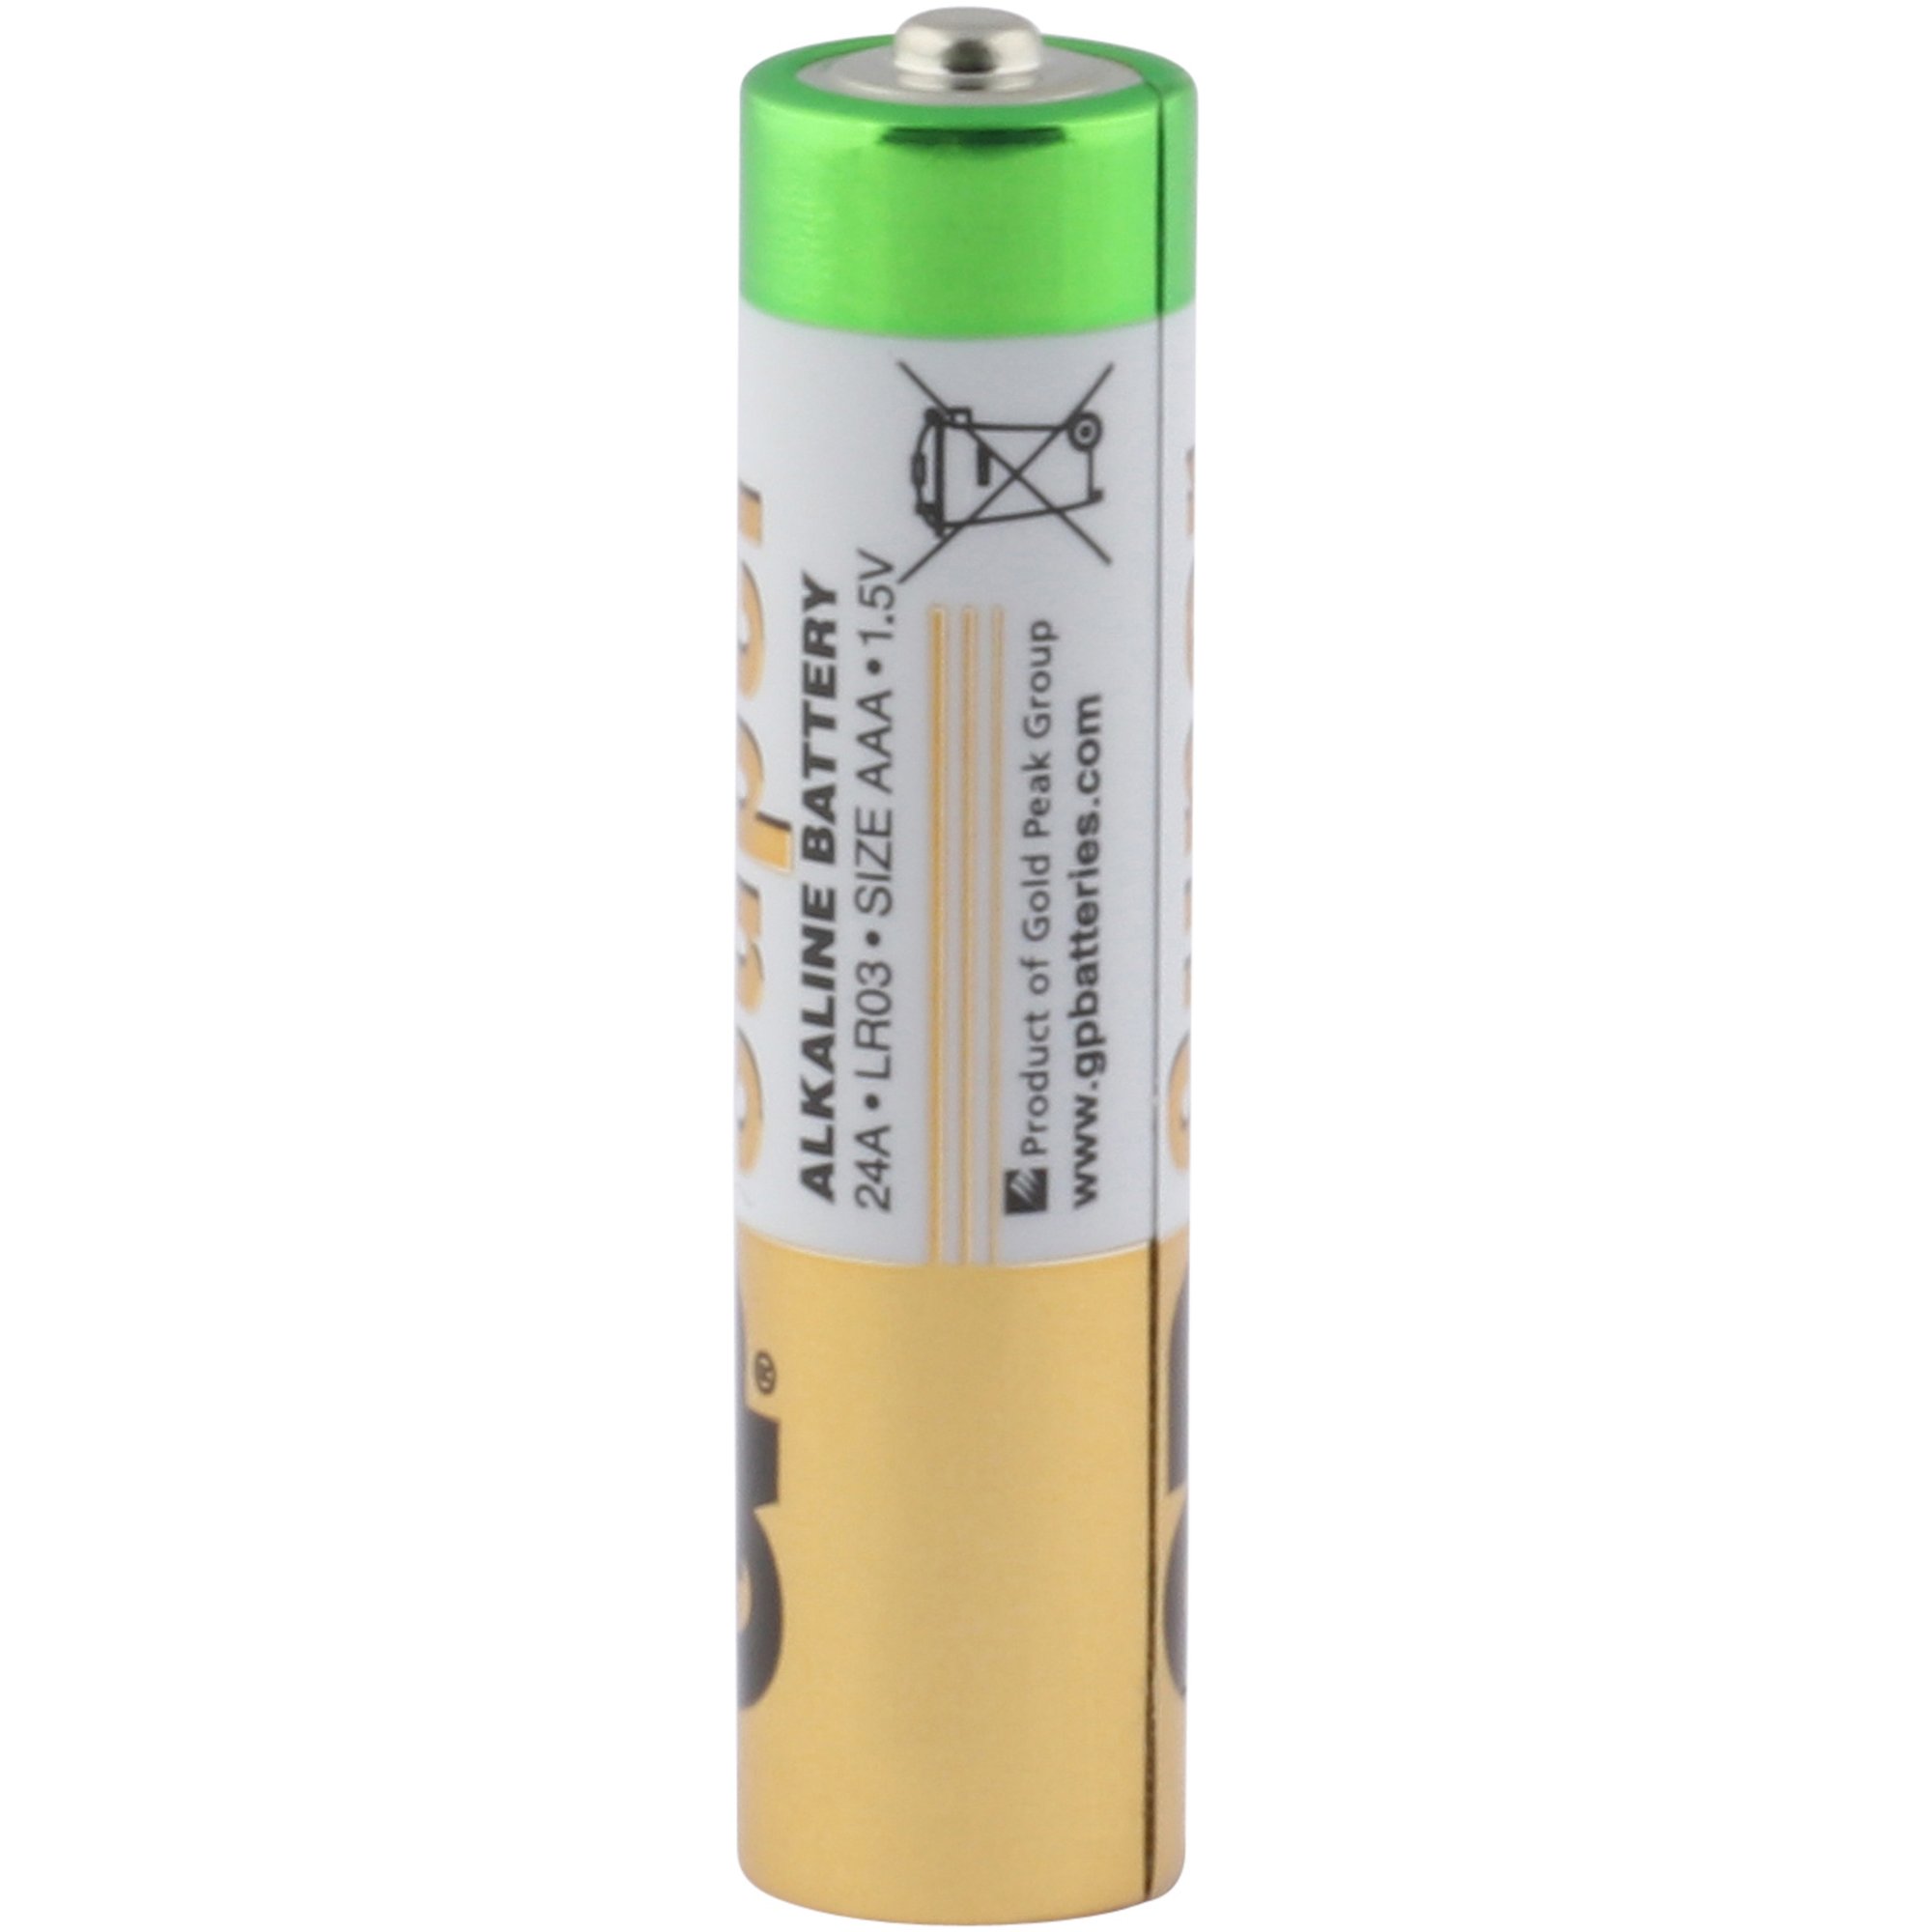 AAA Micro Batterie GP Alkaline Super 1,5V 12 Stück, AA Mignon Batterie GP Alkaline Super 1,5V 32 Stück